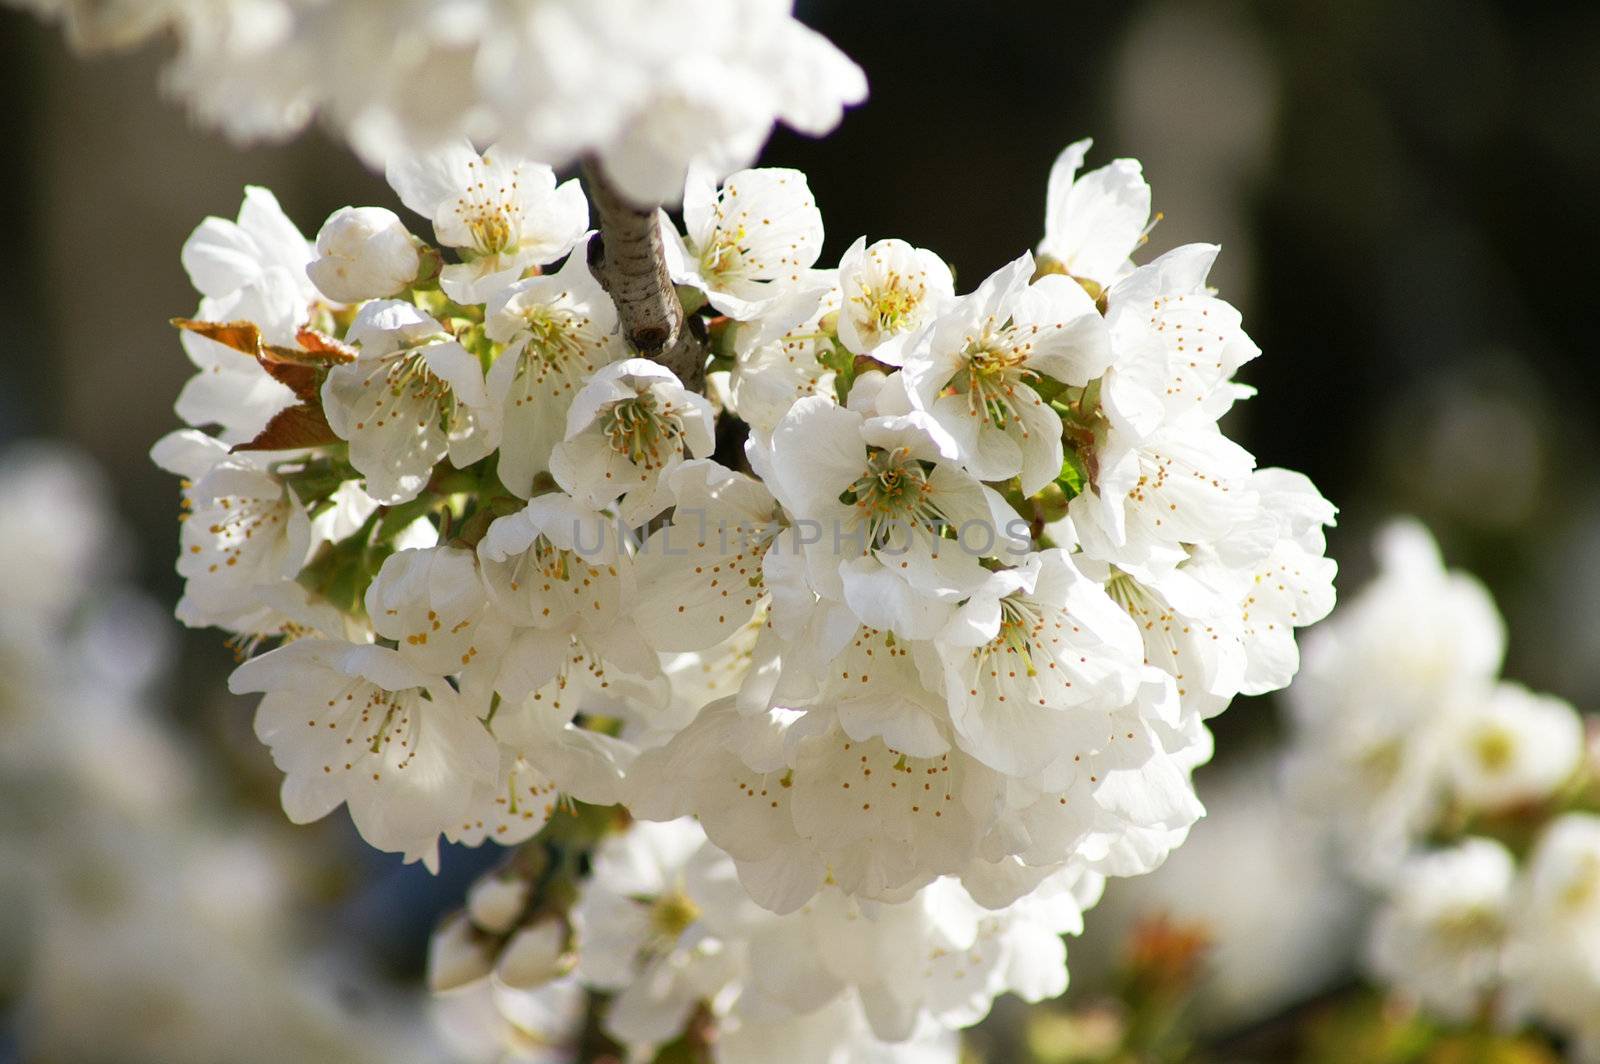 Blossom in spring by photochecker